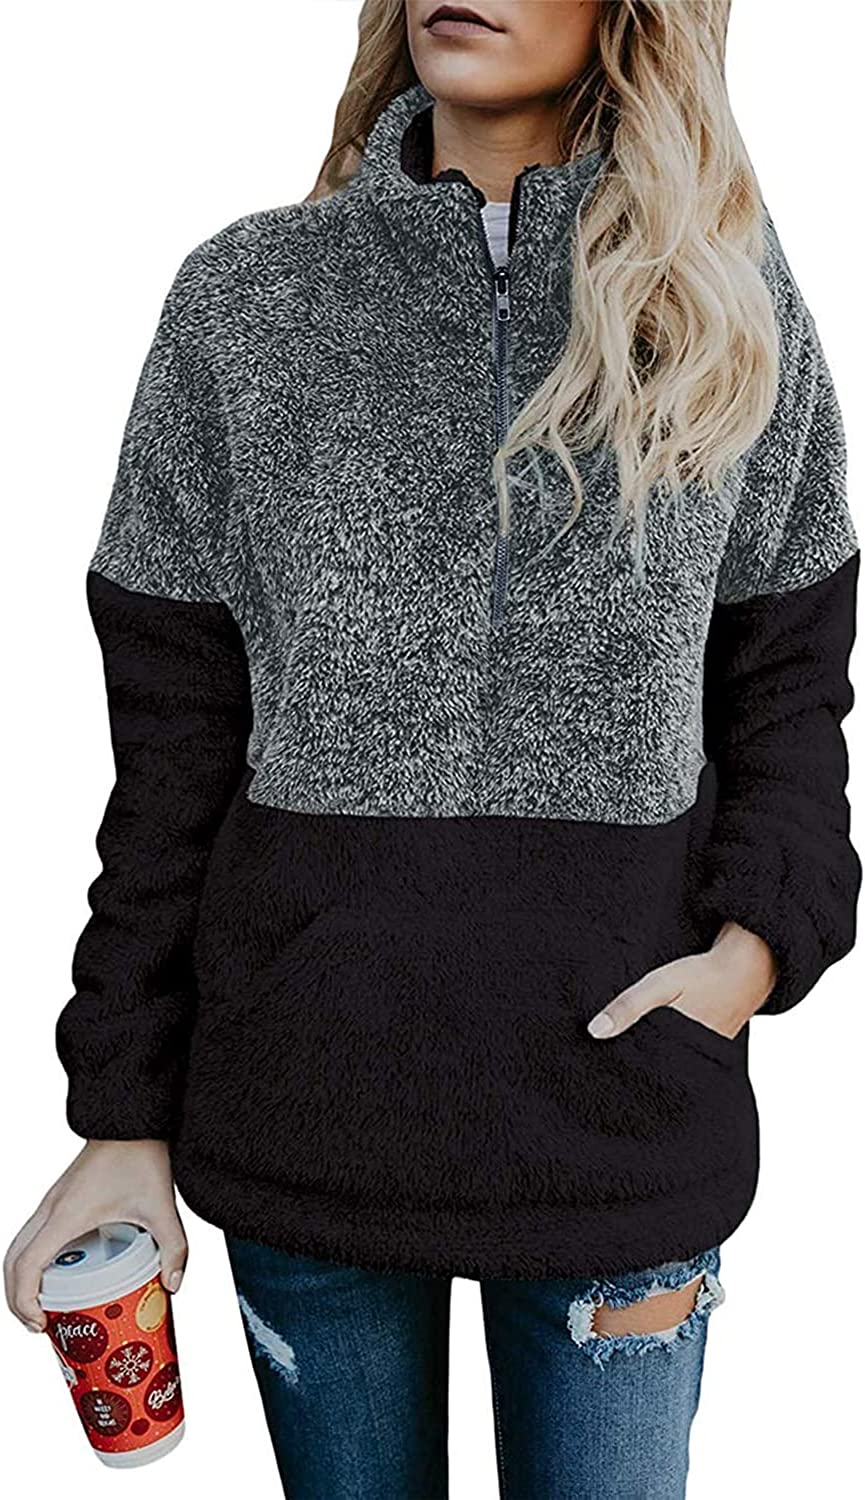 MEROKEETY Women's Long Sleeve Contrast Color Zipper Sherpa Pile Pullover Tops Fleece Sweatshirt